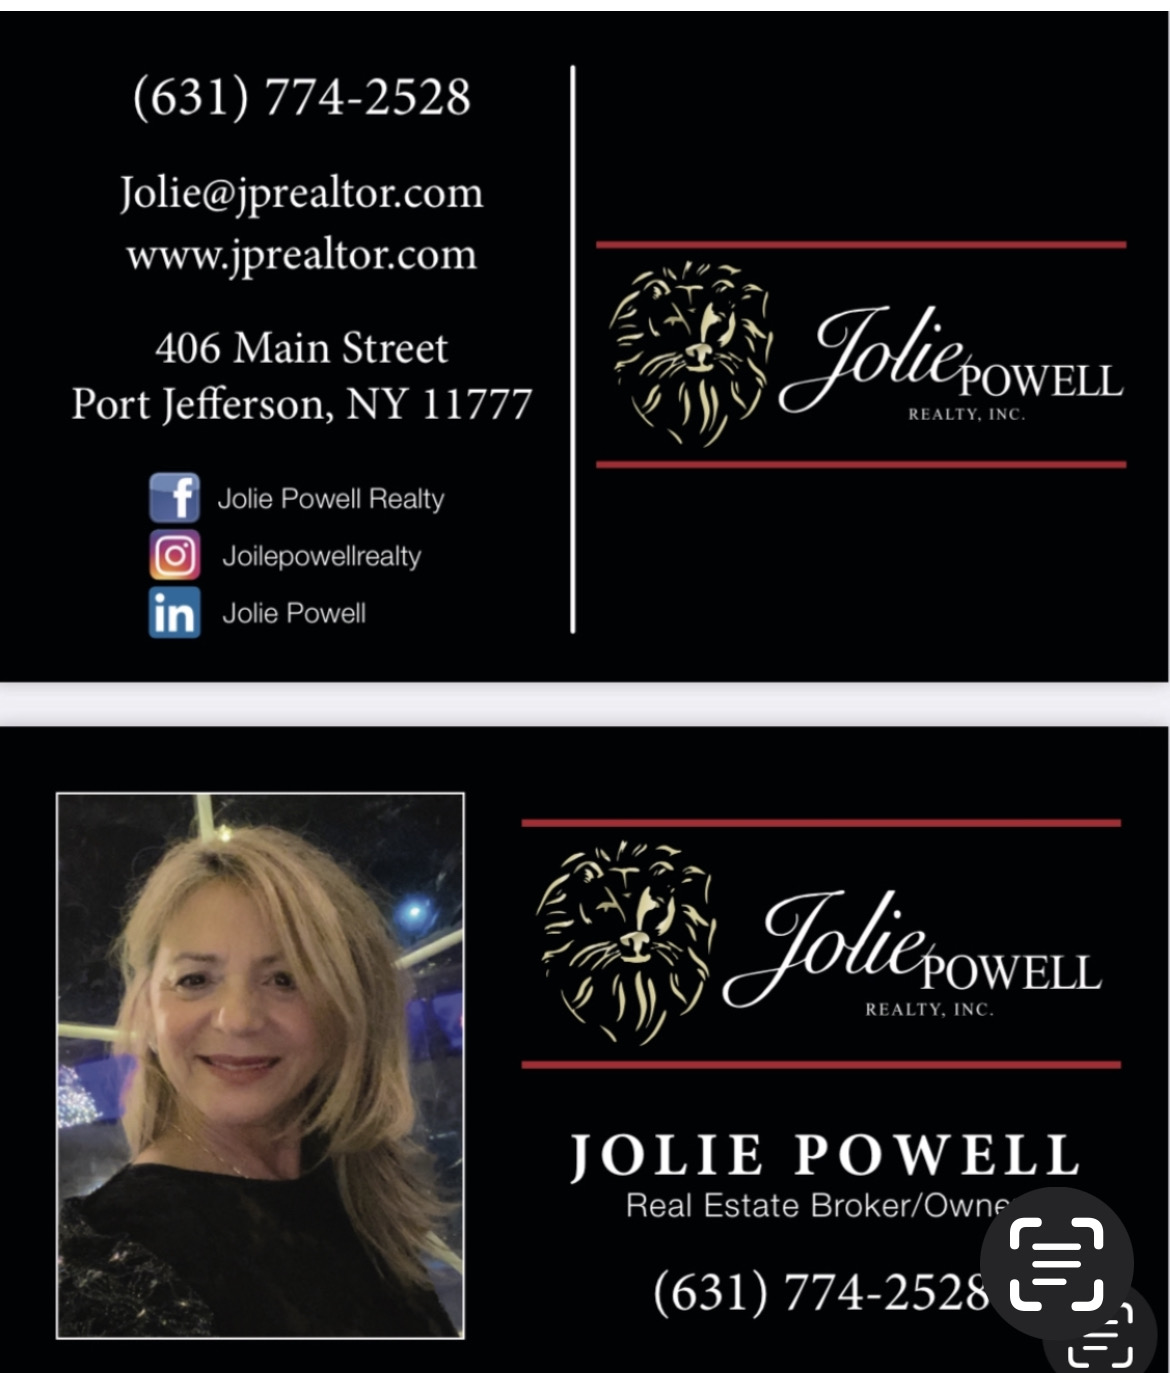 Jolie Powell Realty Inc 406 Main St, Port Jefferson New York 11777